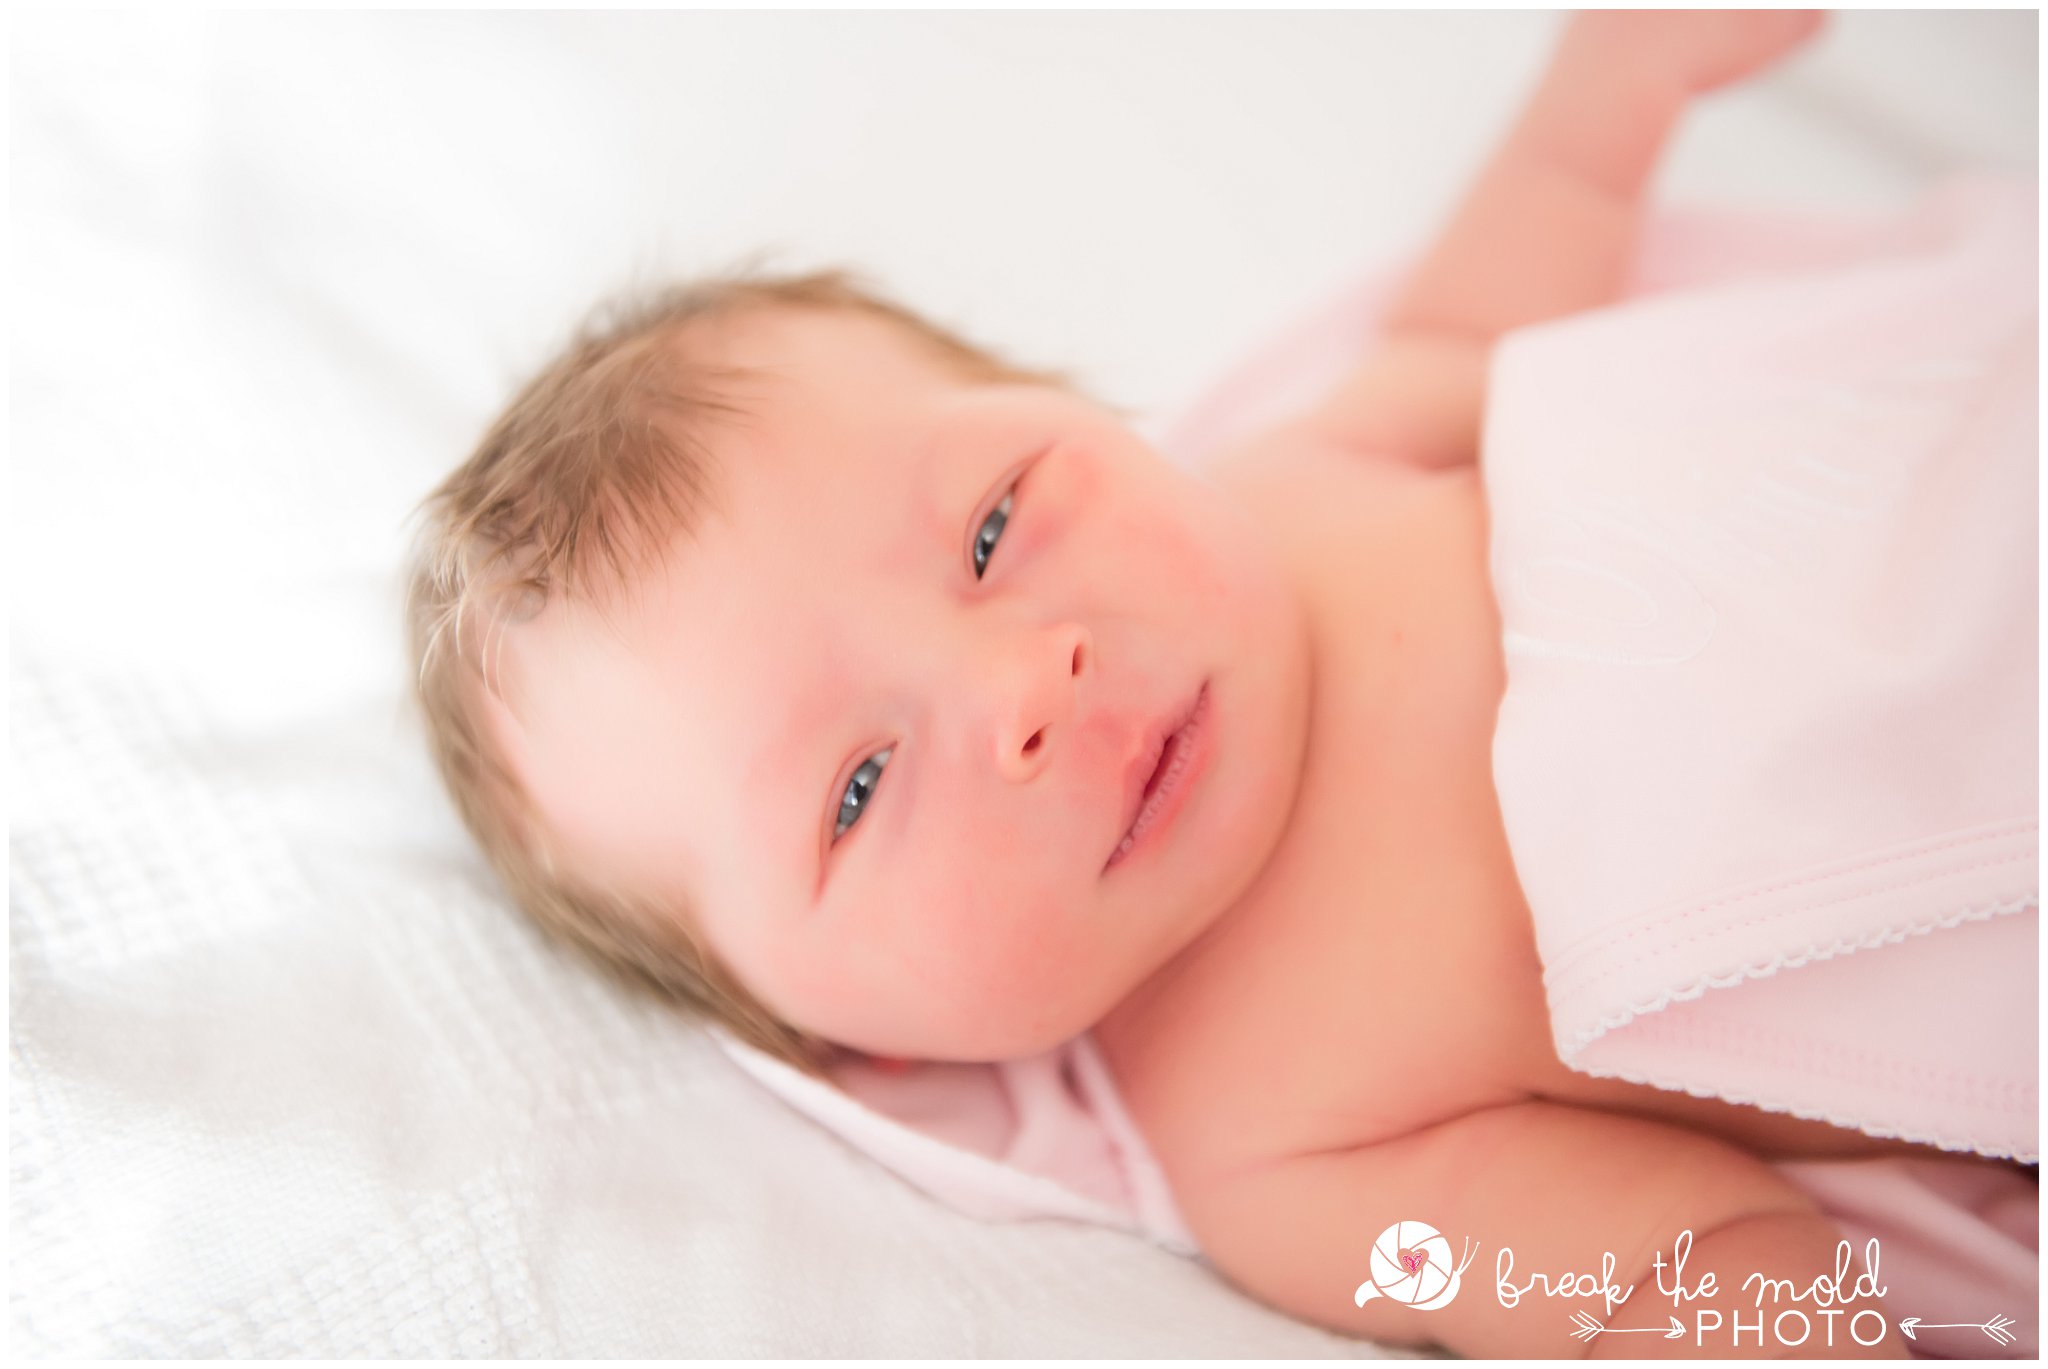 fresh-24-newborn-in-hospital-break-the-mold-photo-baby-girl-sweet-in-room-photos (21).jpg